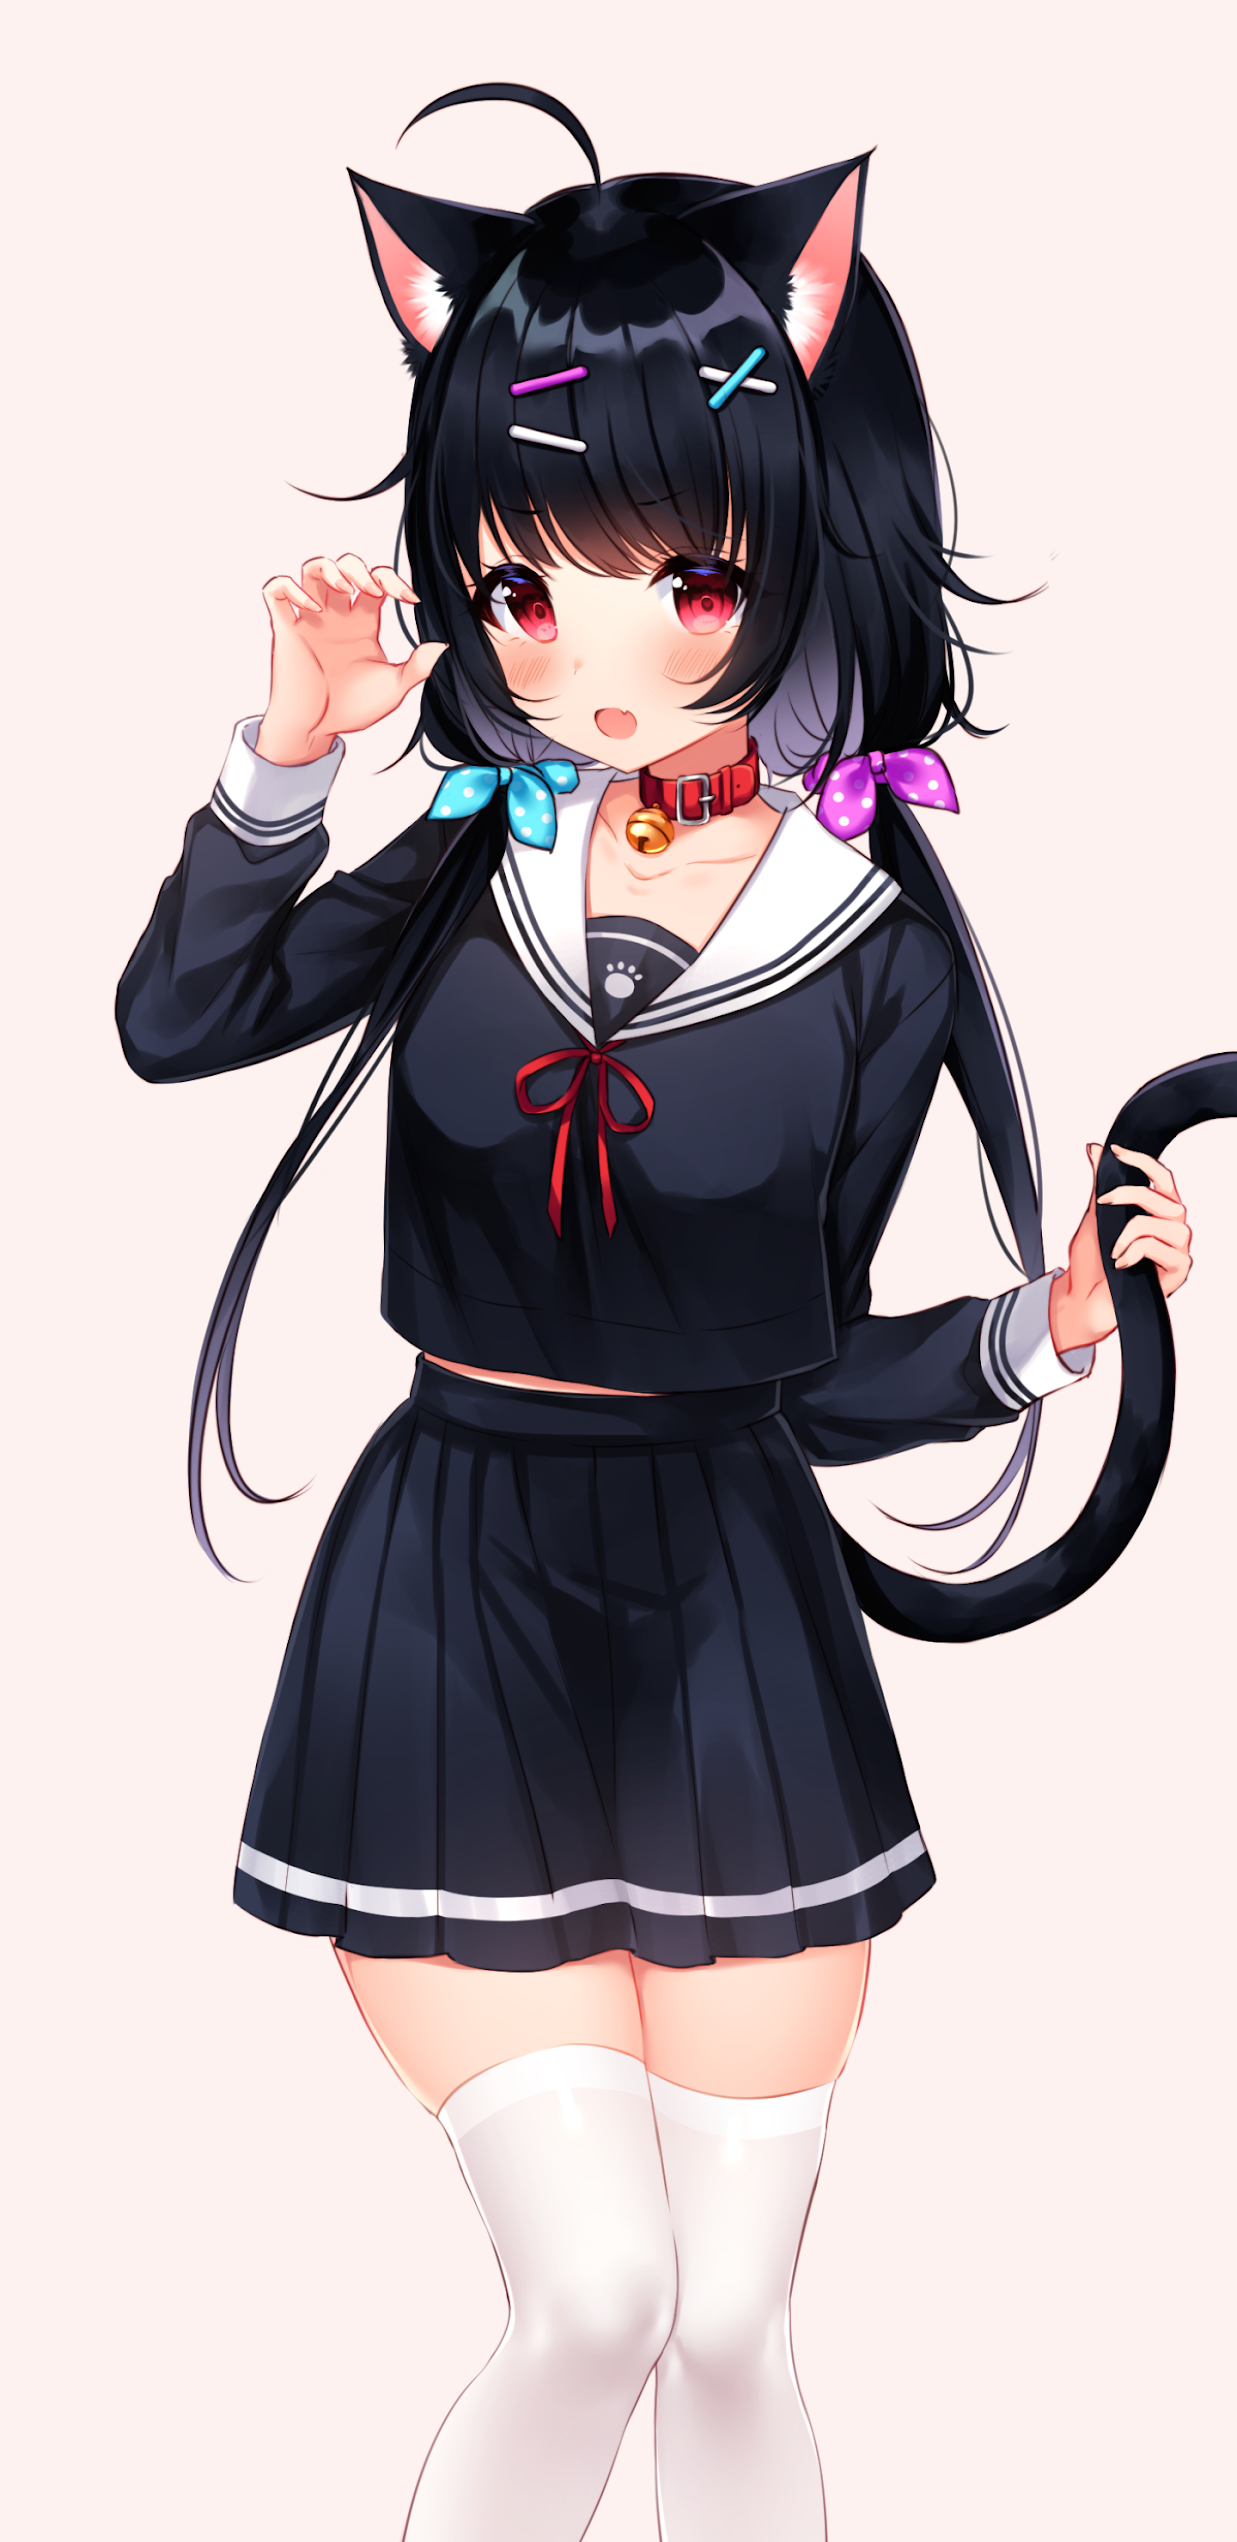 Anime Girl in school uniform